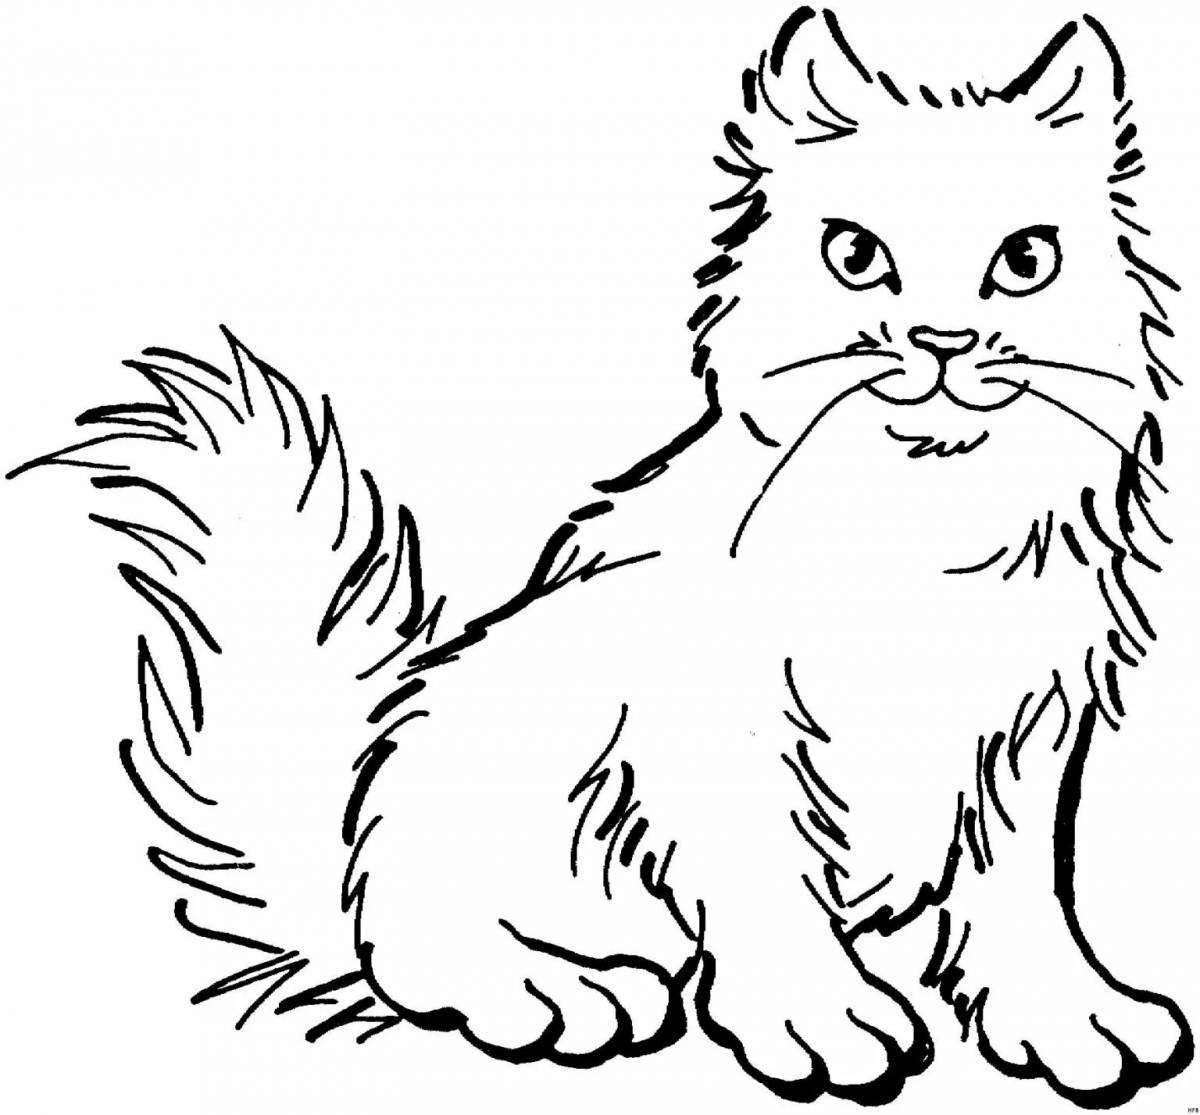 Coloring book fluffy siberian cat